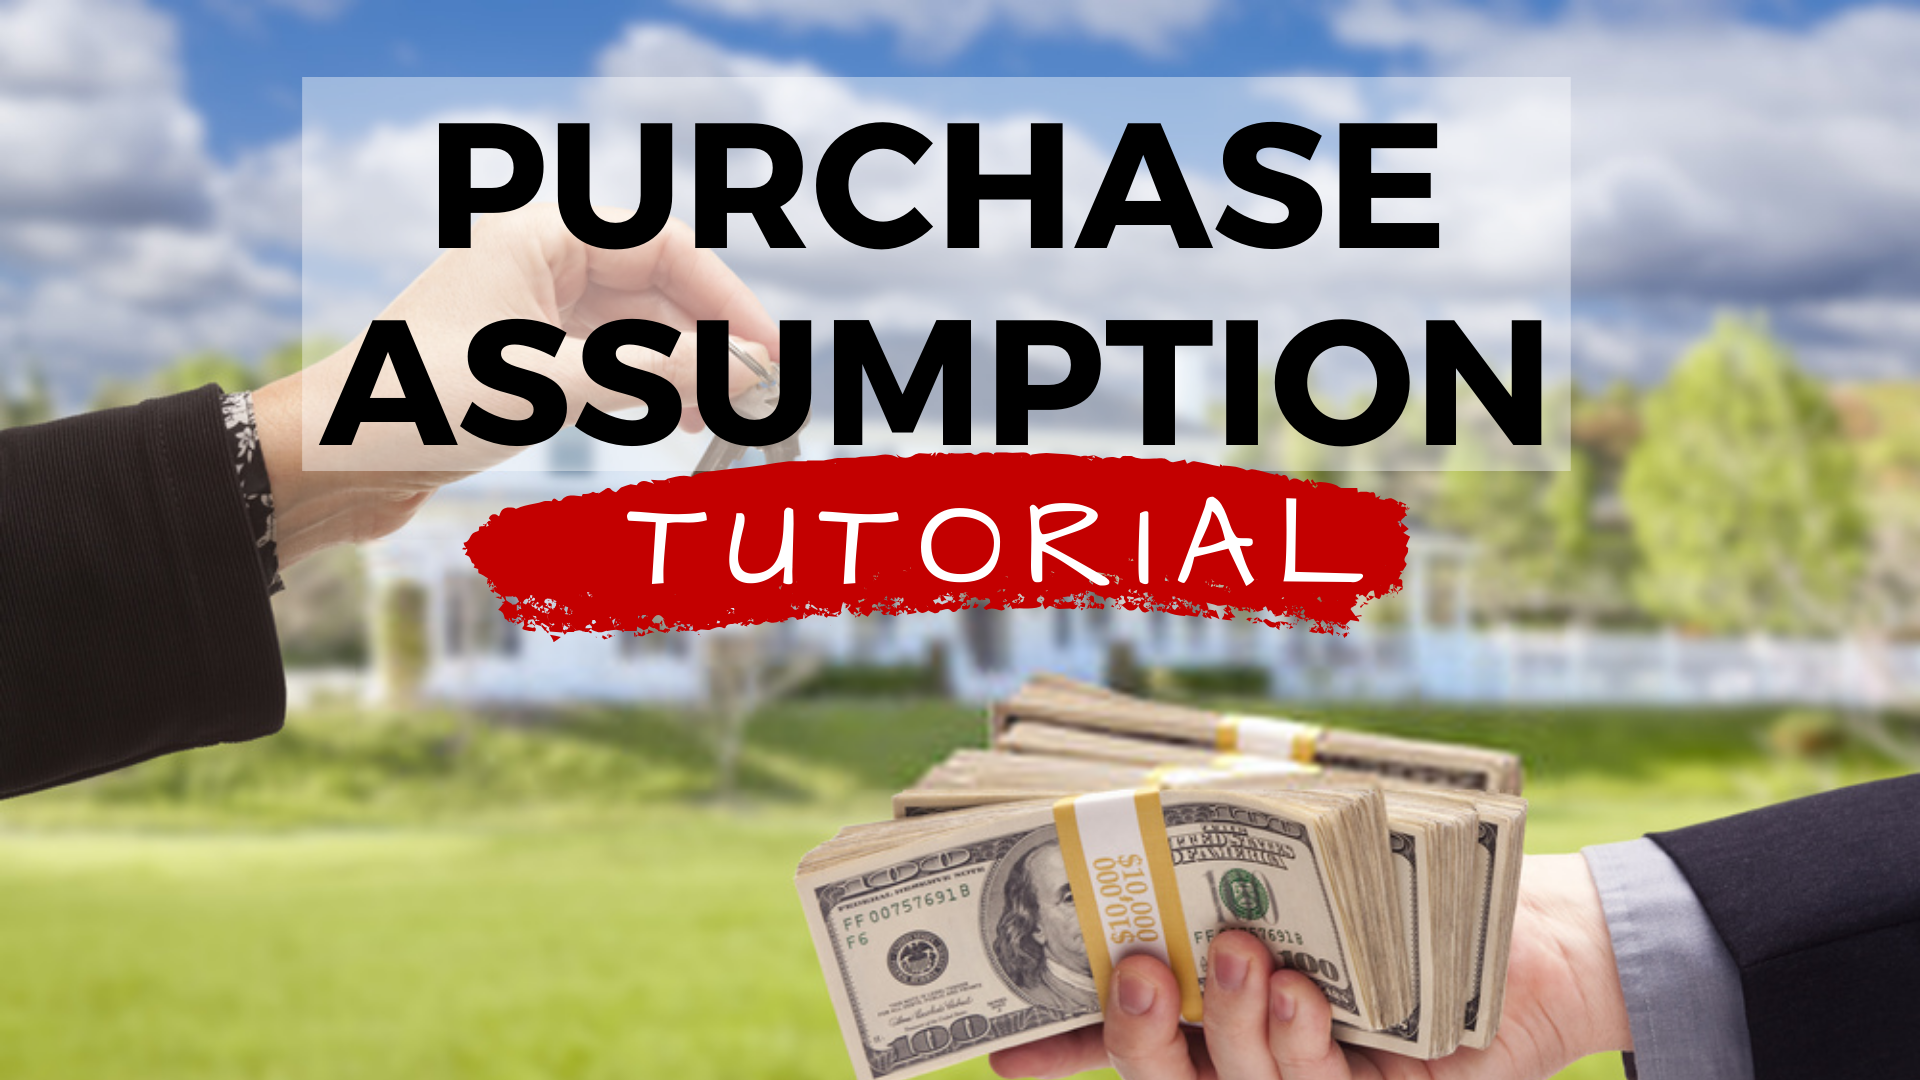 purchase assumptions tutorial banner